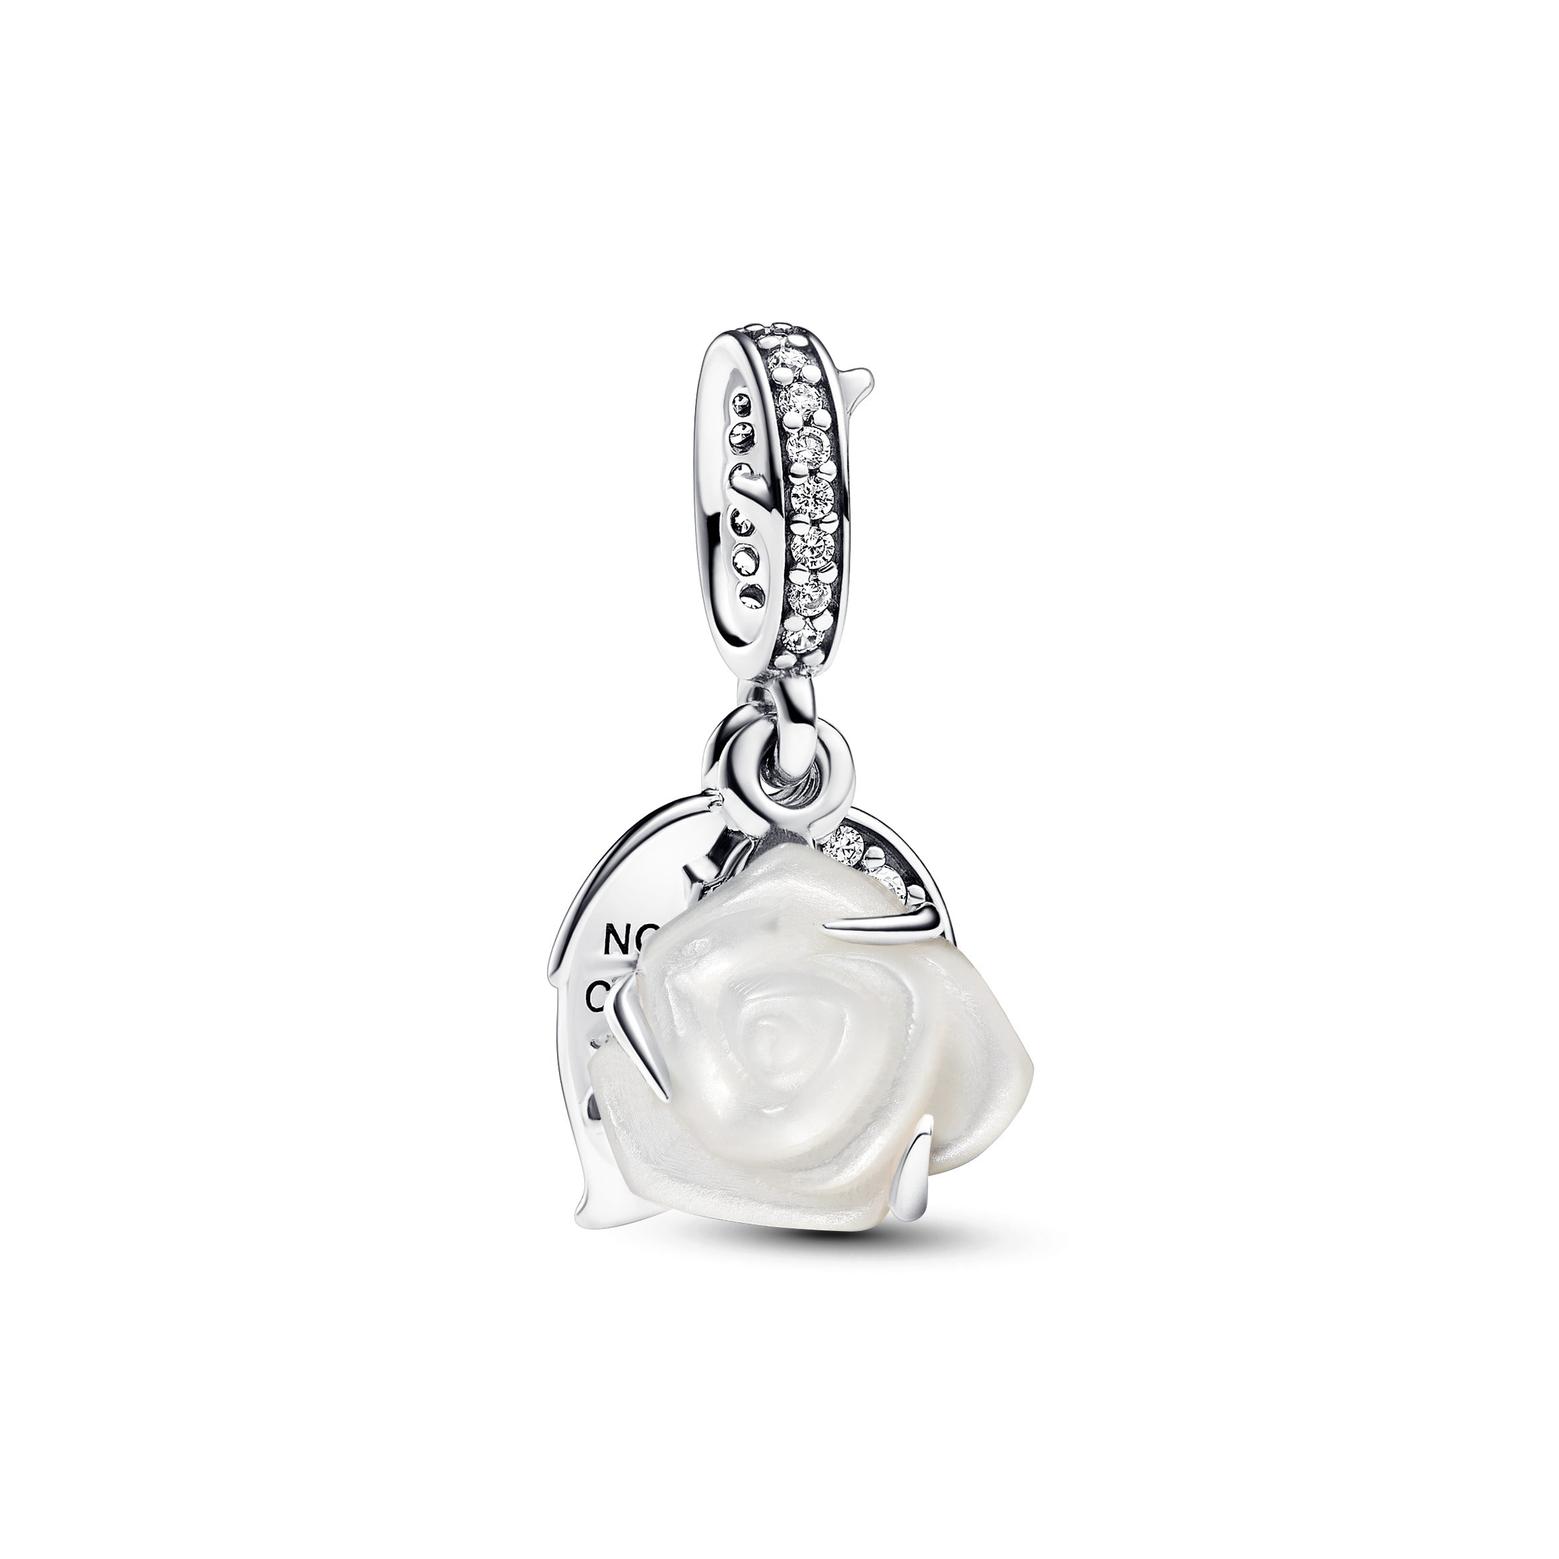 Pandora - White Rose in Bloom charm - Sølv på tilbud til 499 kr. hos Vibholm Guld & Sølv